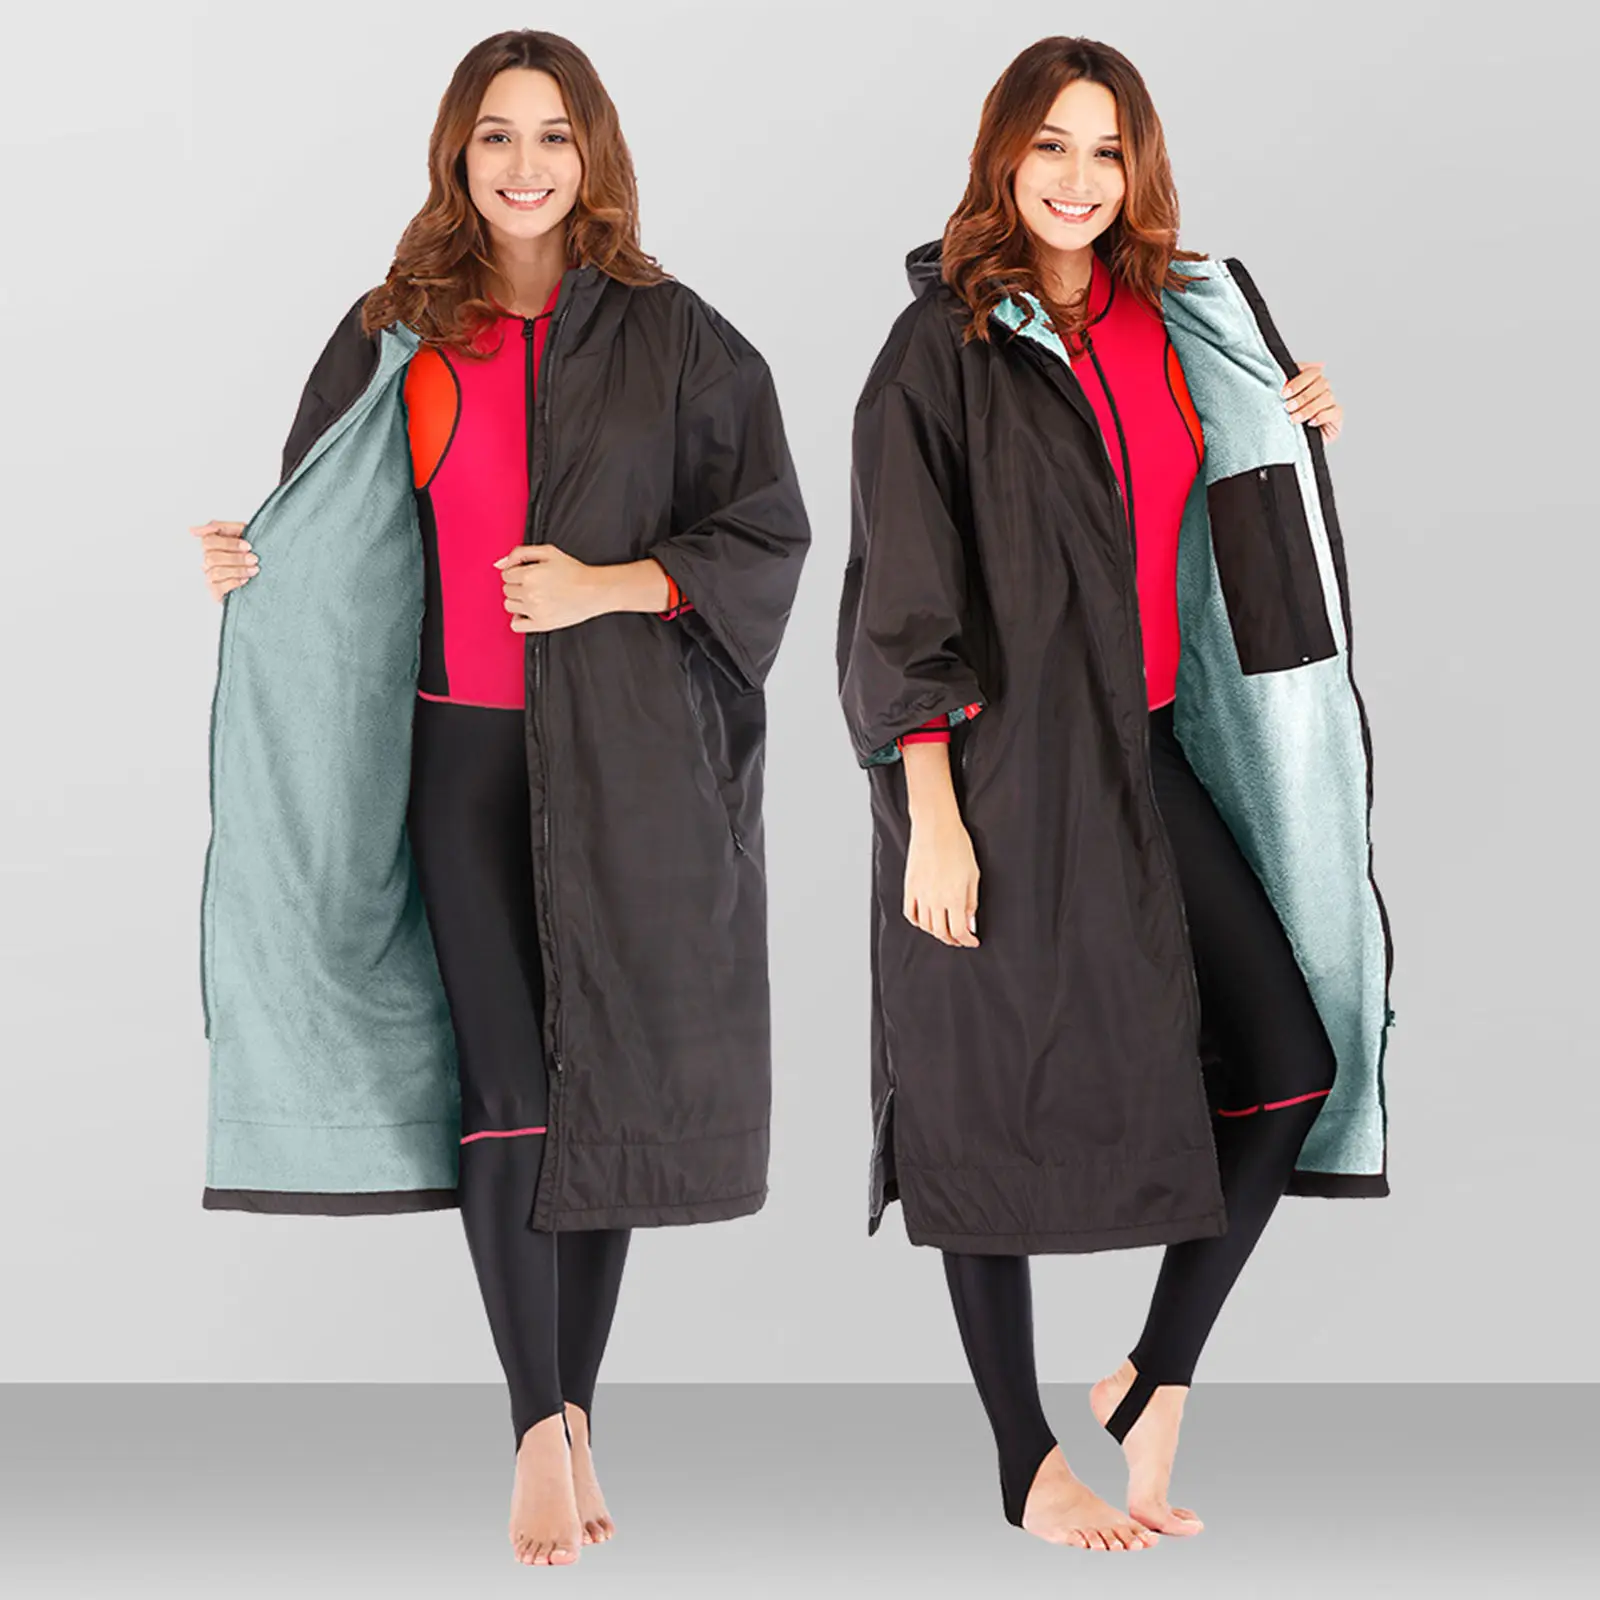 Women Men Surf Changing Robe Coat Jacket Thermal Warm Overcoat Rain Coat Poncho Cape Suit Outdoor Bathrobe Outwear Dry Robe